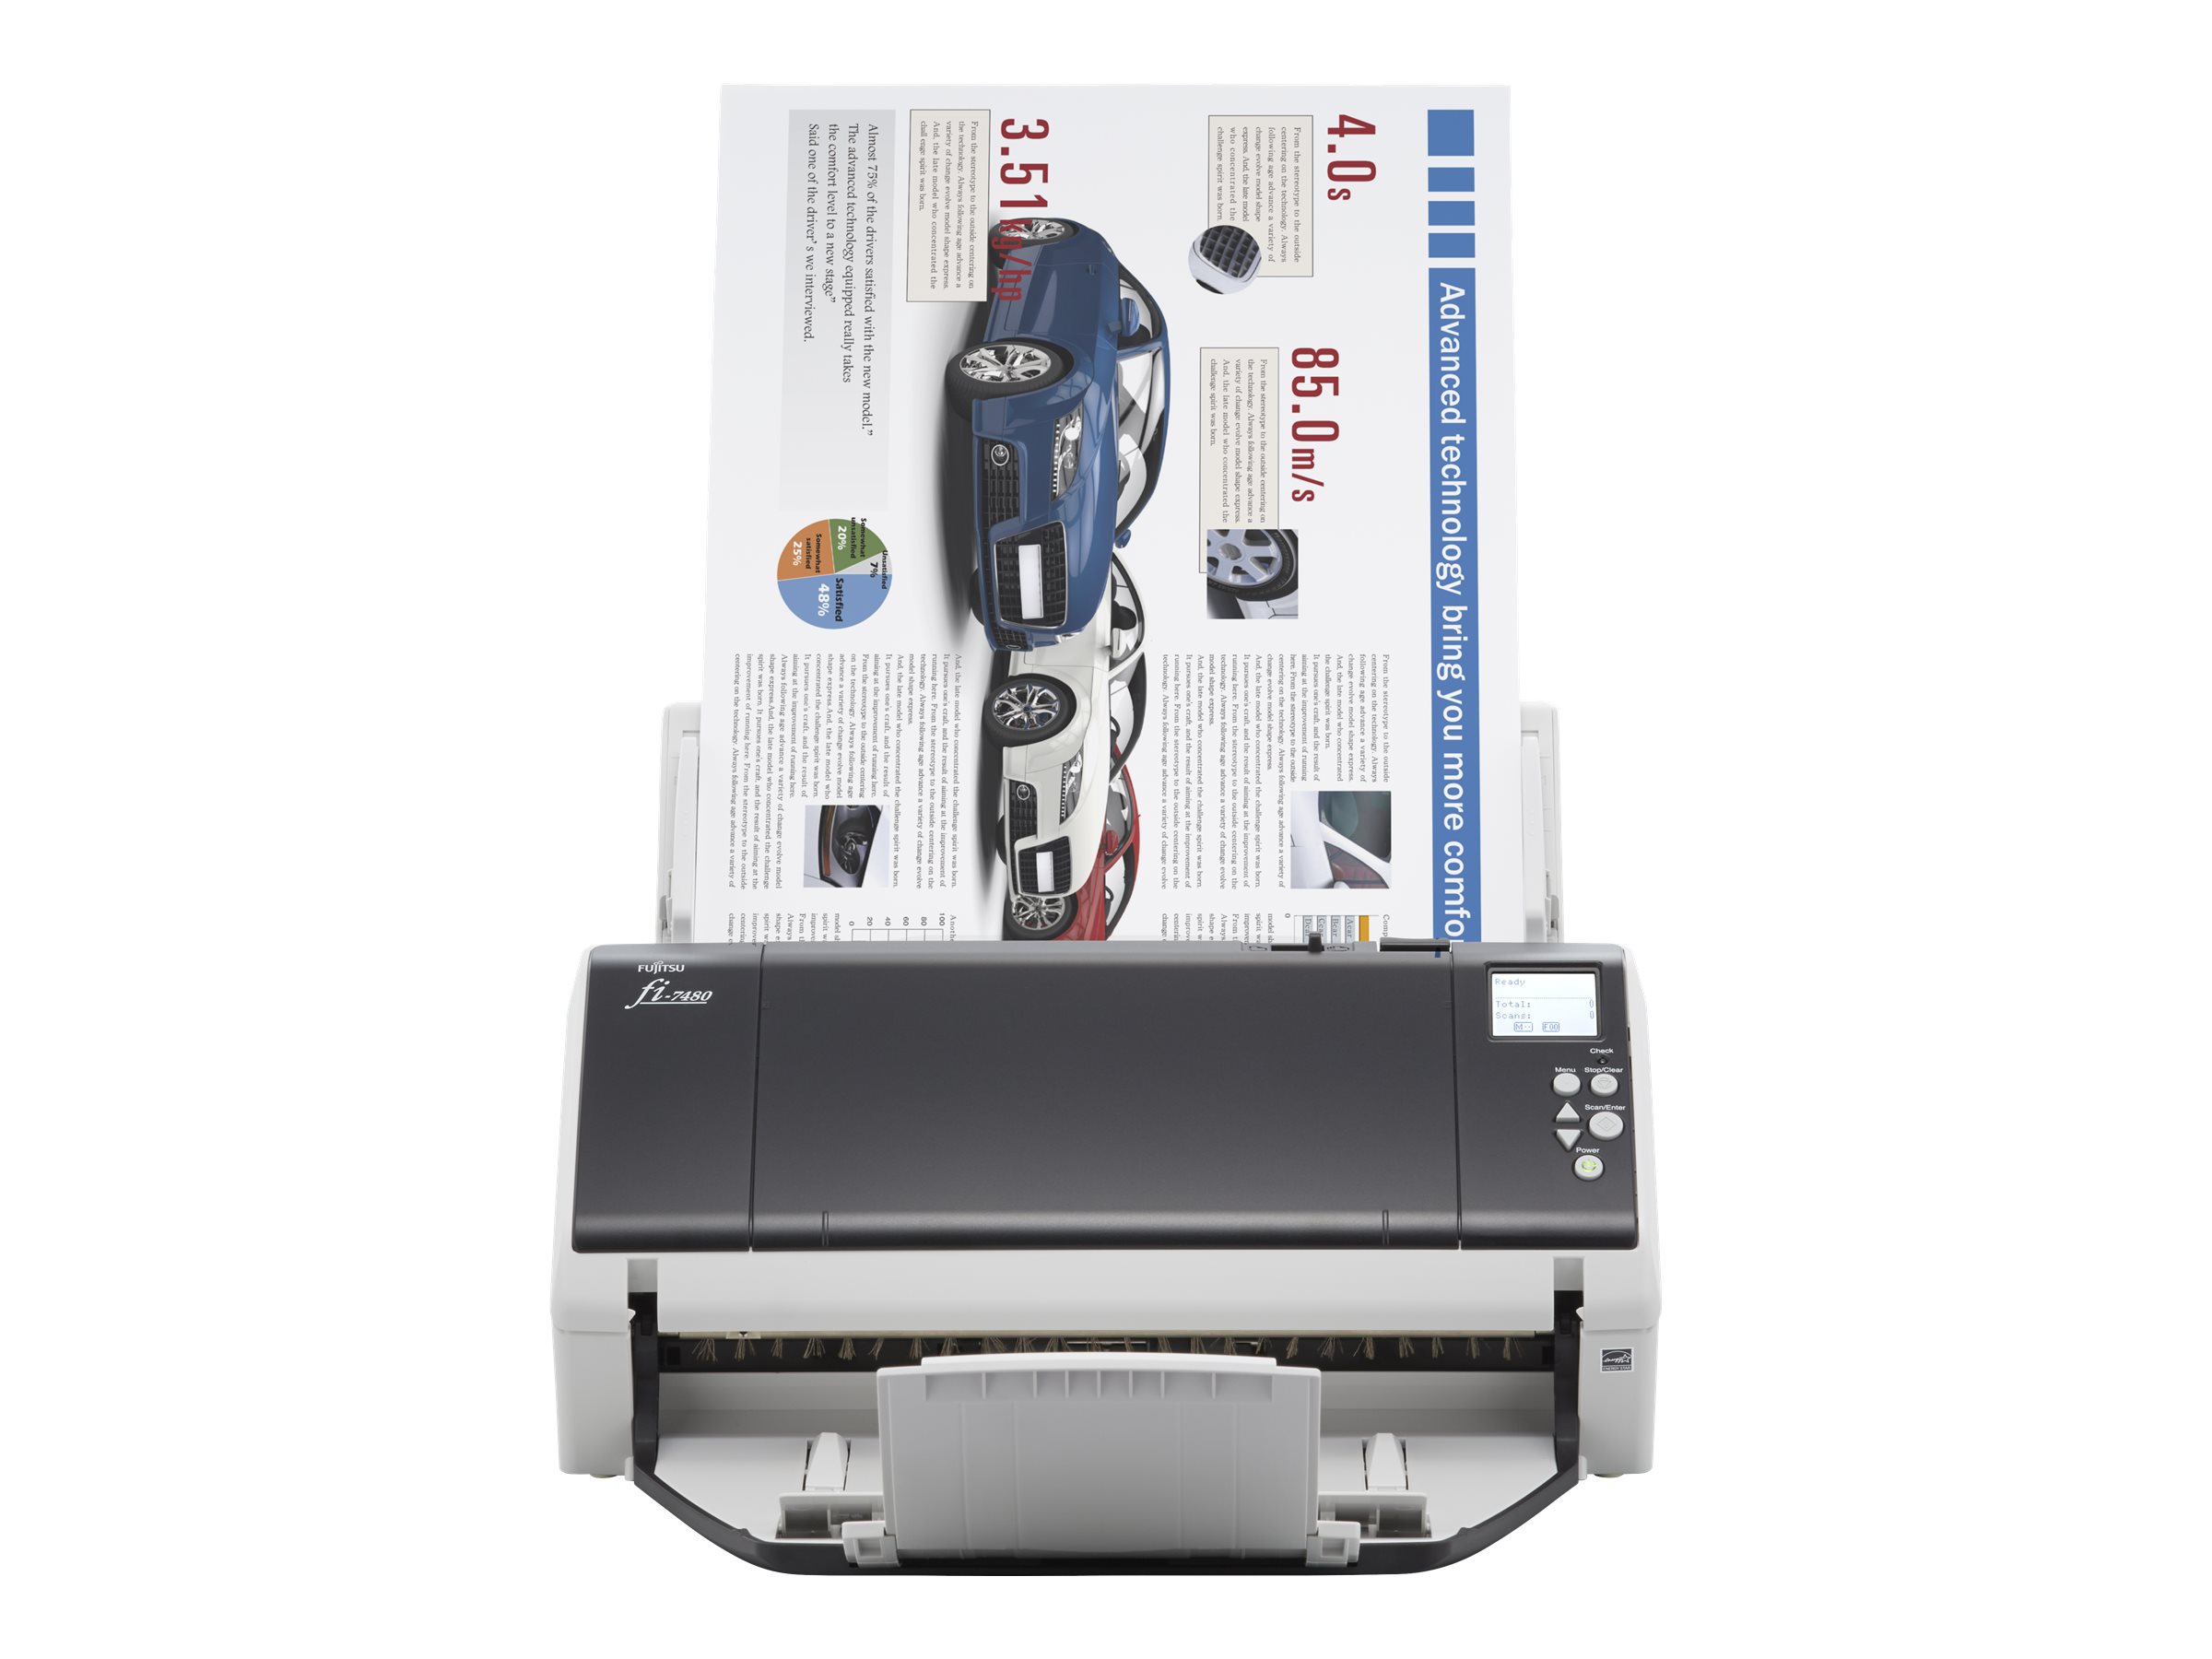 Fujitsu fi-7480 - Dokumentenscanner - Dual CCD - Duplex - 304.8 x 431.8 mm - 600 dpi x 600 dpi - bis zu 160 Seiten/Min. (einfarbig)